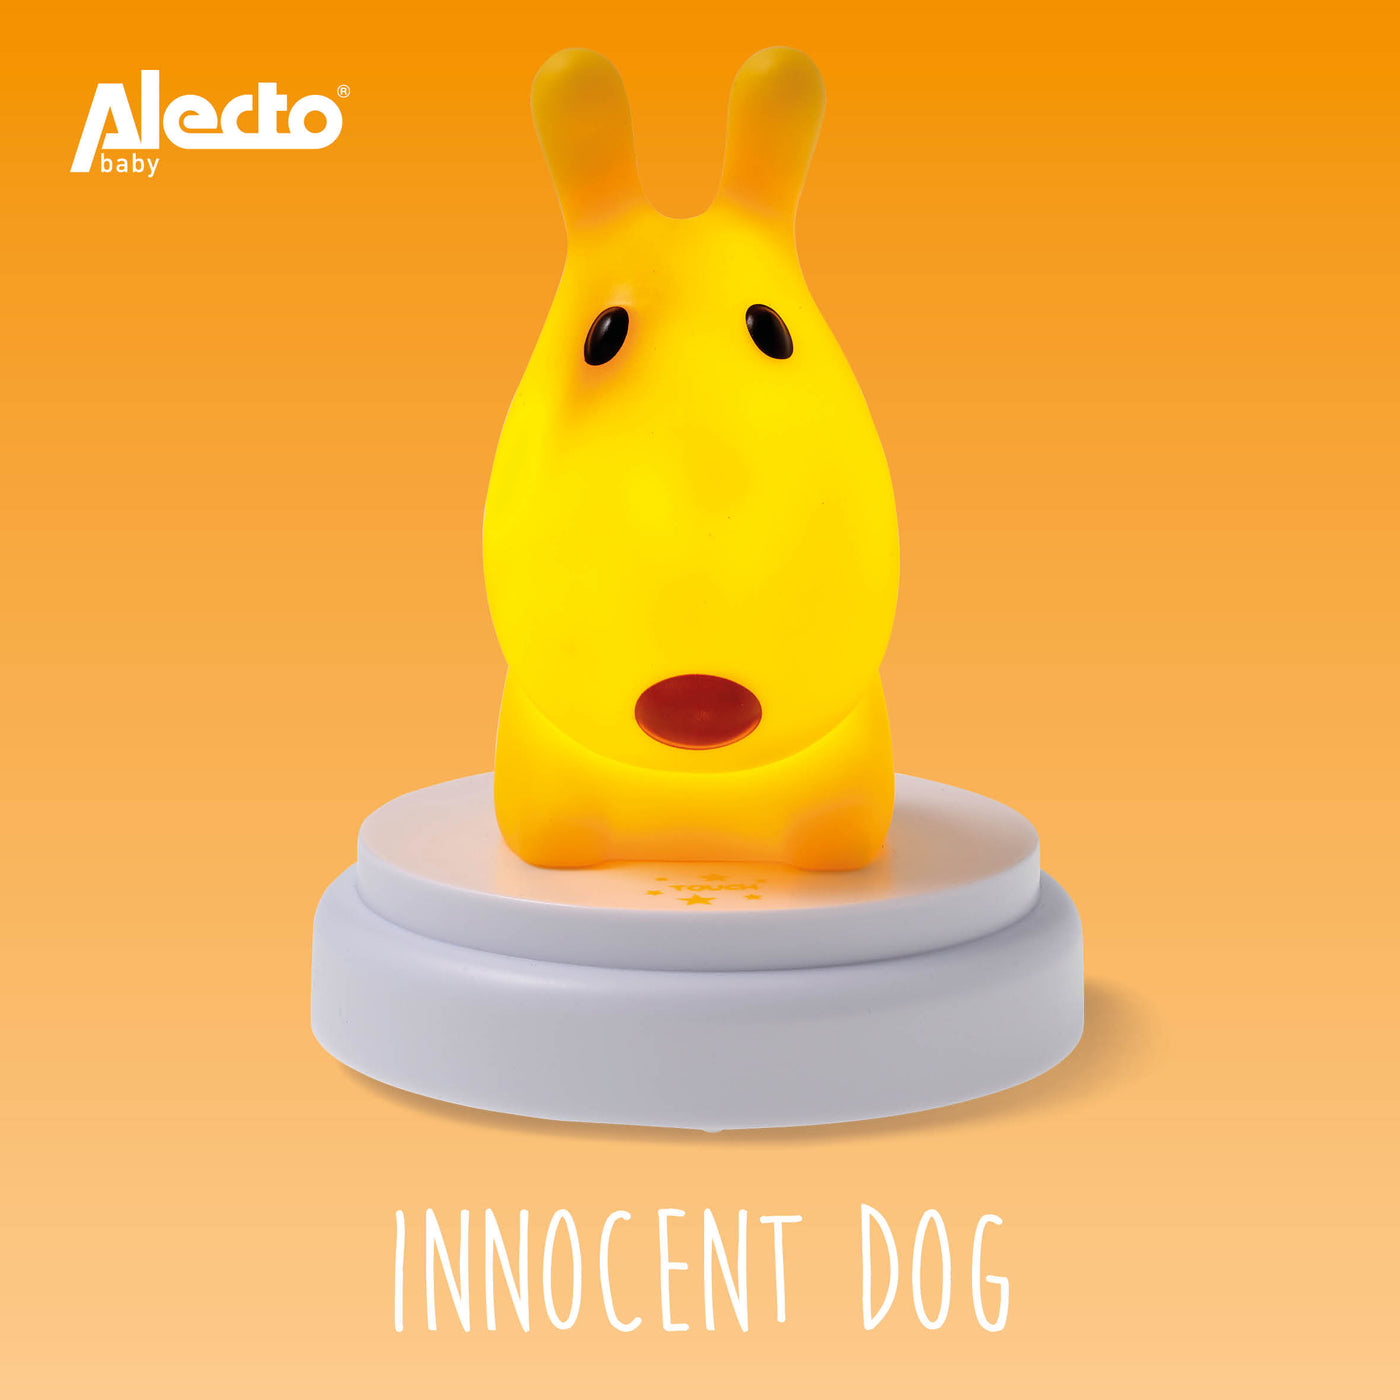 Alecto INNOCENT DOG - LED night light, dog, yellow